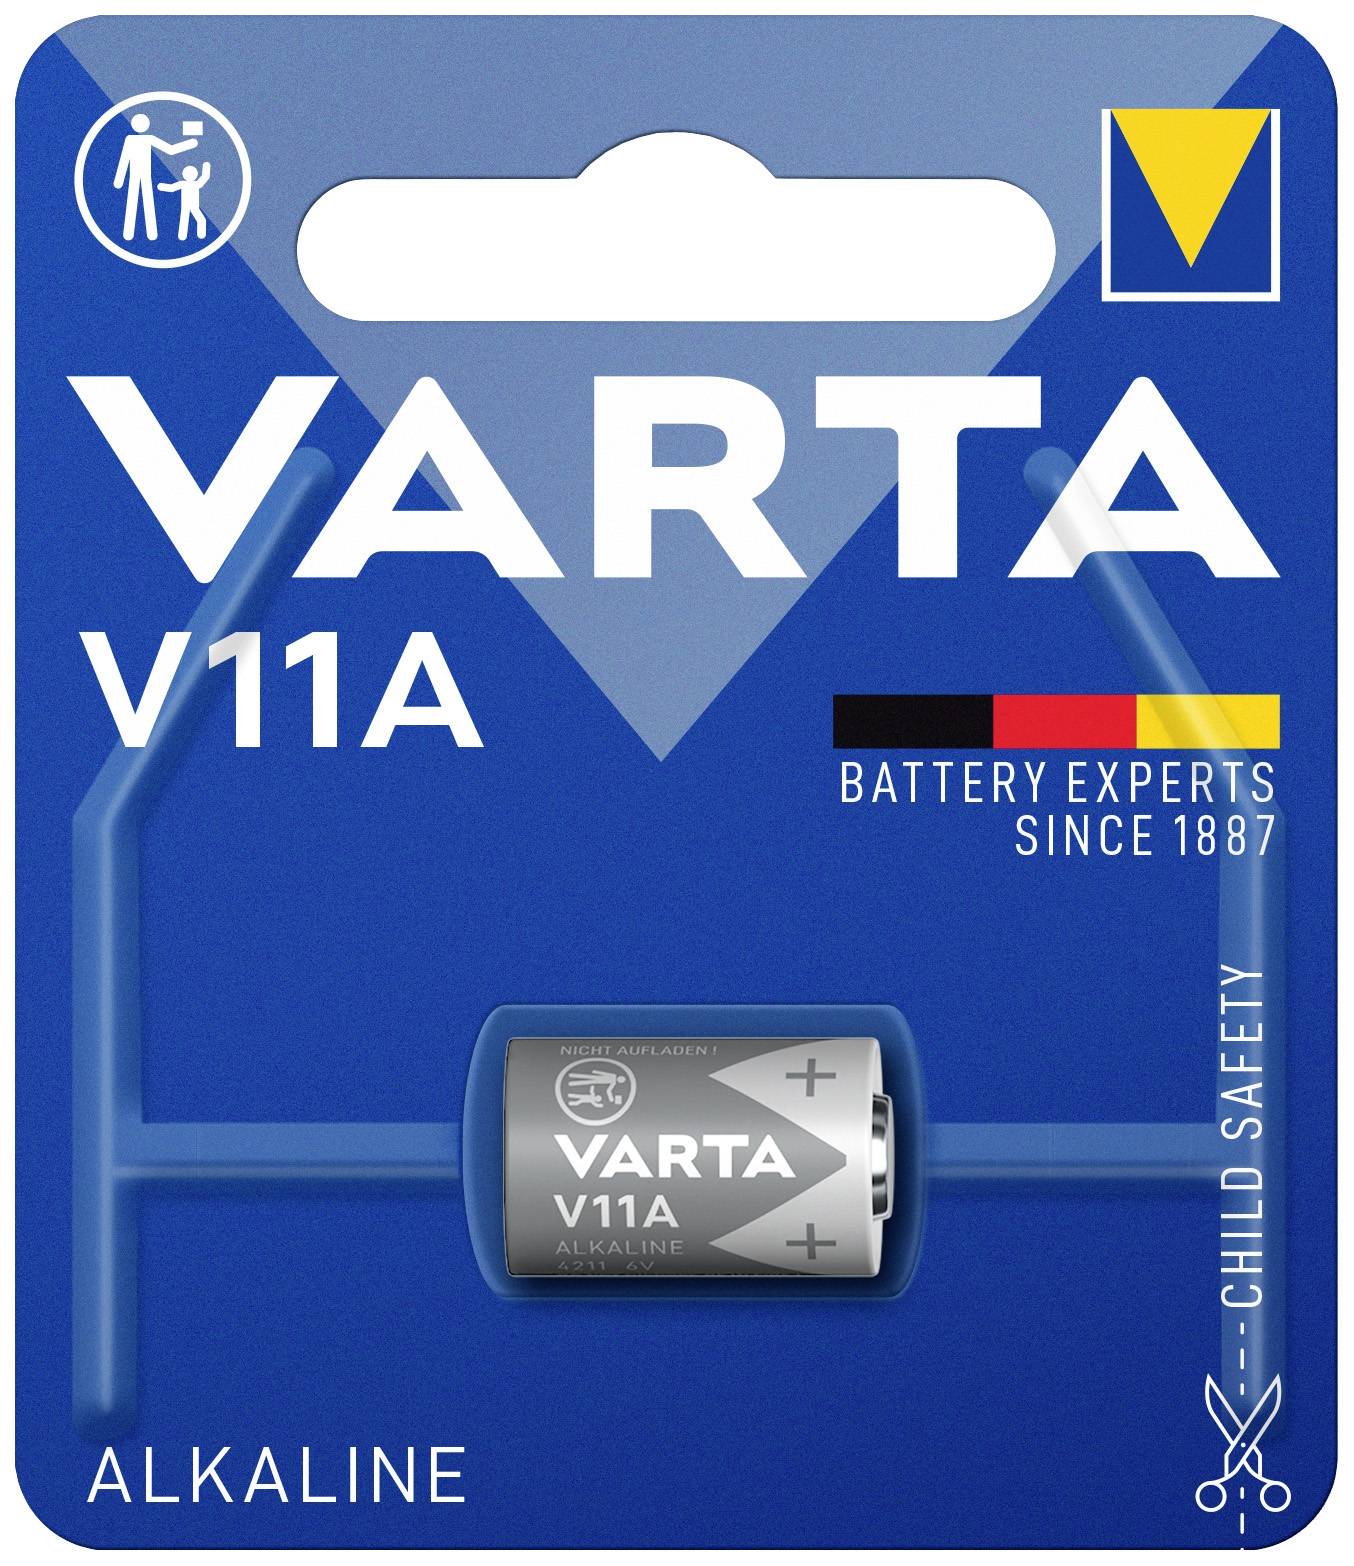 VARTA Spezial-Batterie 11 A Alkali-Mangan Varta Professional Electronics V11A 6 V 38 mAh 1 St.